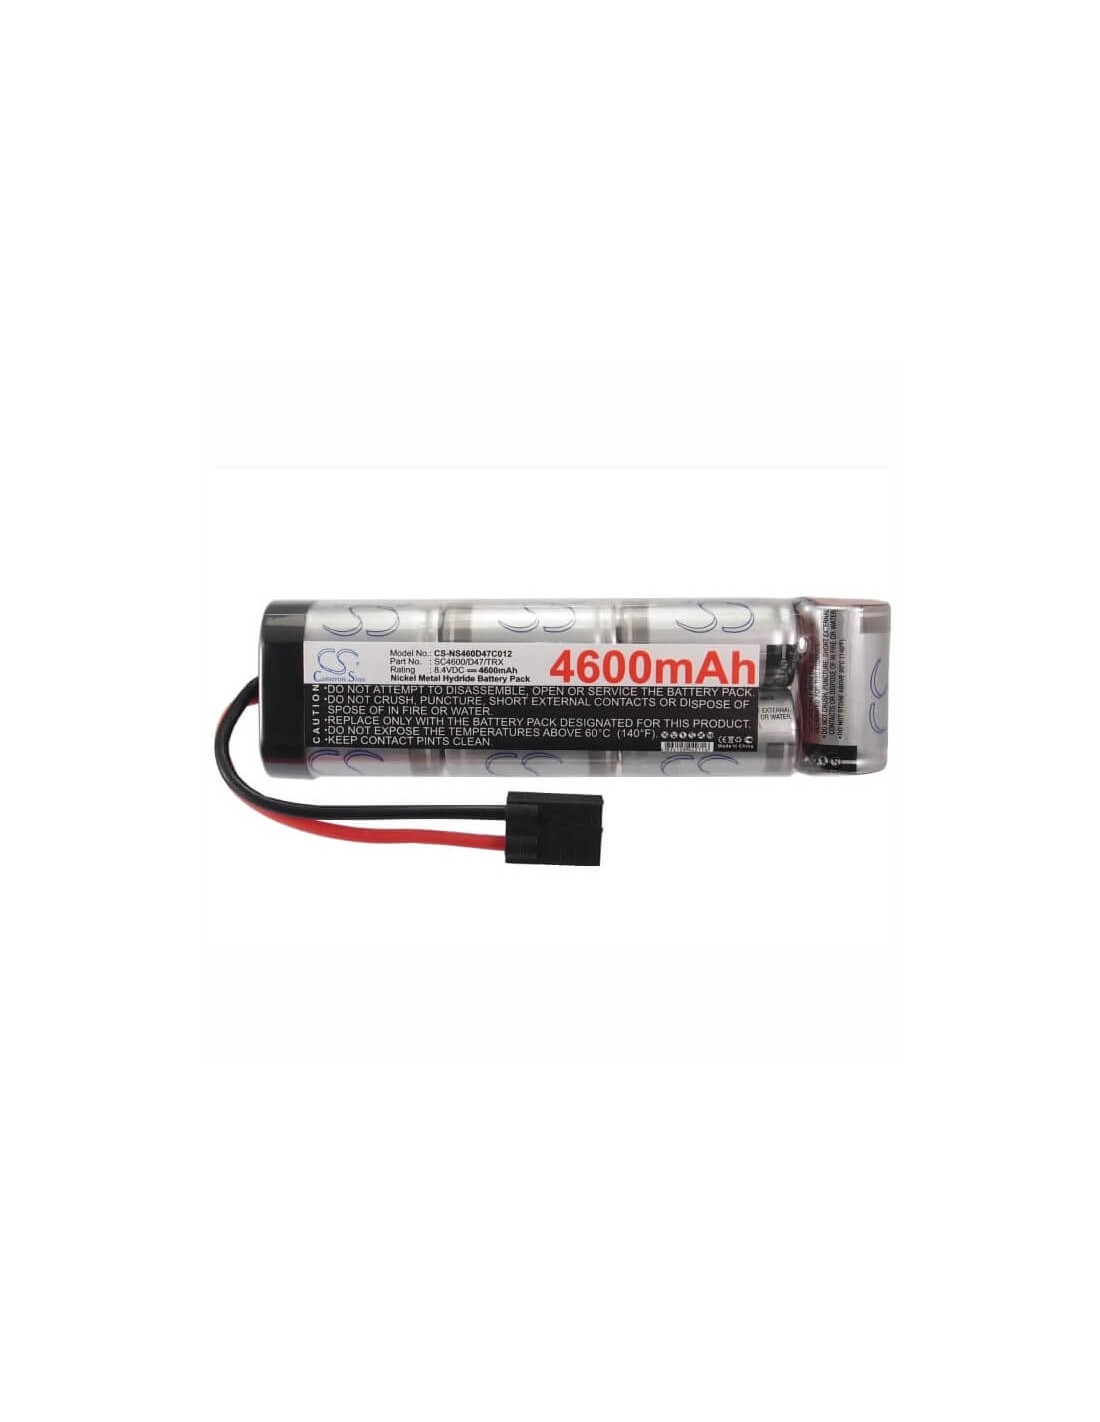 8.4V, Ni-MH, 4600mAh, Battery fits Cameron Sino, Cs-ns460d47c012, 38.64Wh